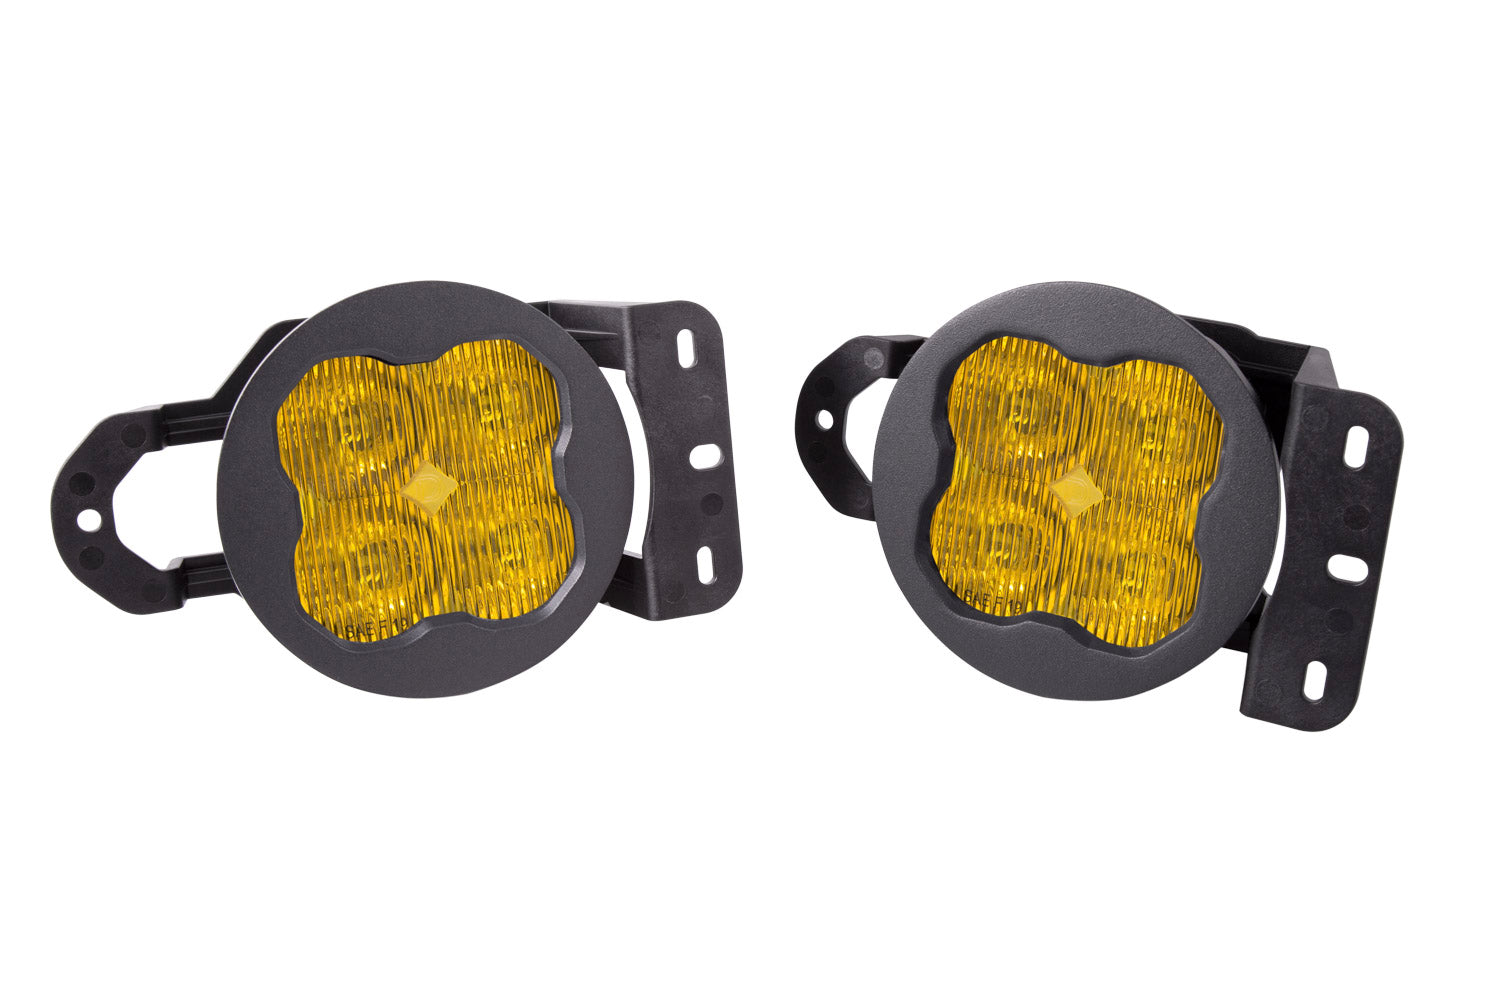 SS3 LED Fog Light Kit for 2020-2021 Jeep Gladiator Yellow SAE Fog Pro w/ Backlight Type MS Bracket Kit Diode Dynamics